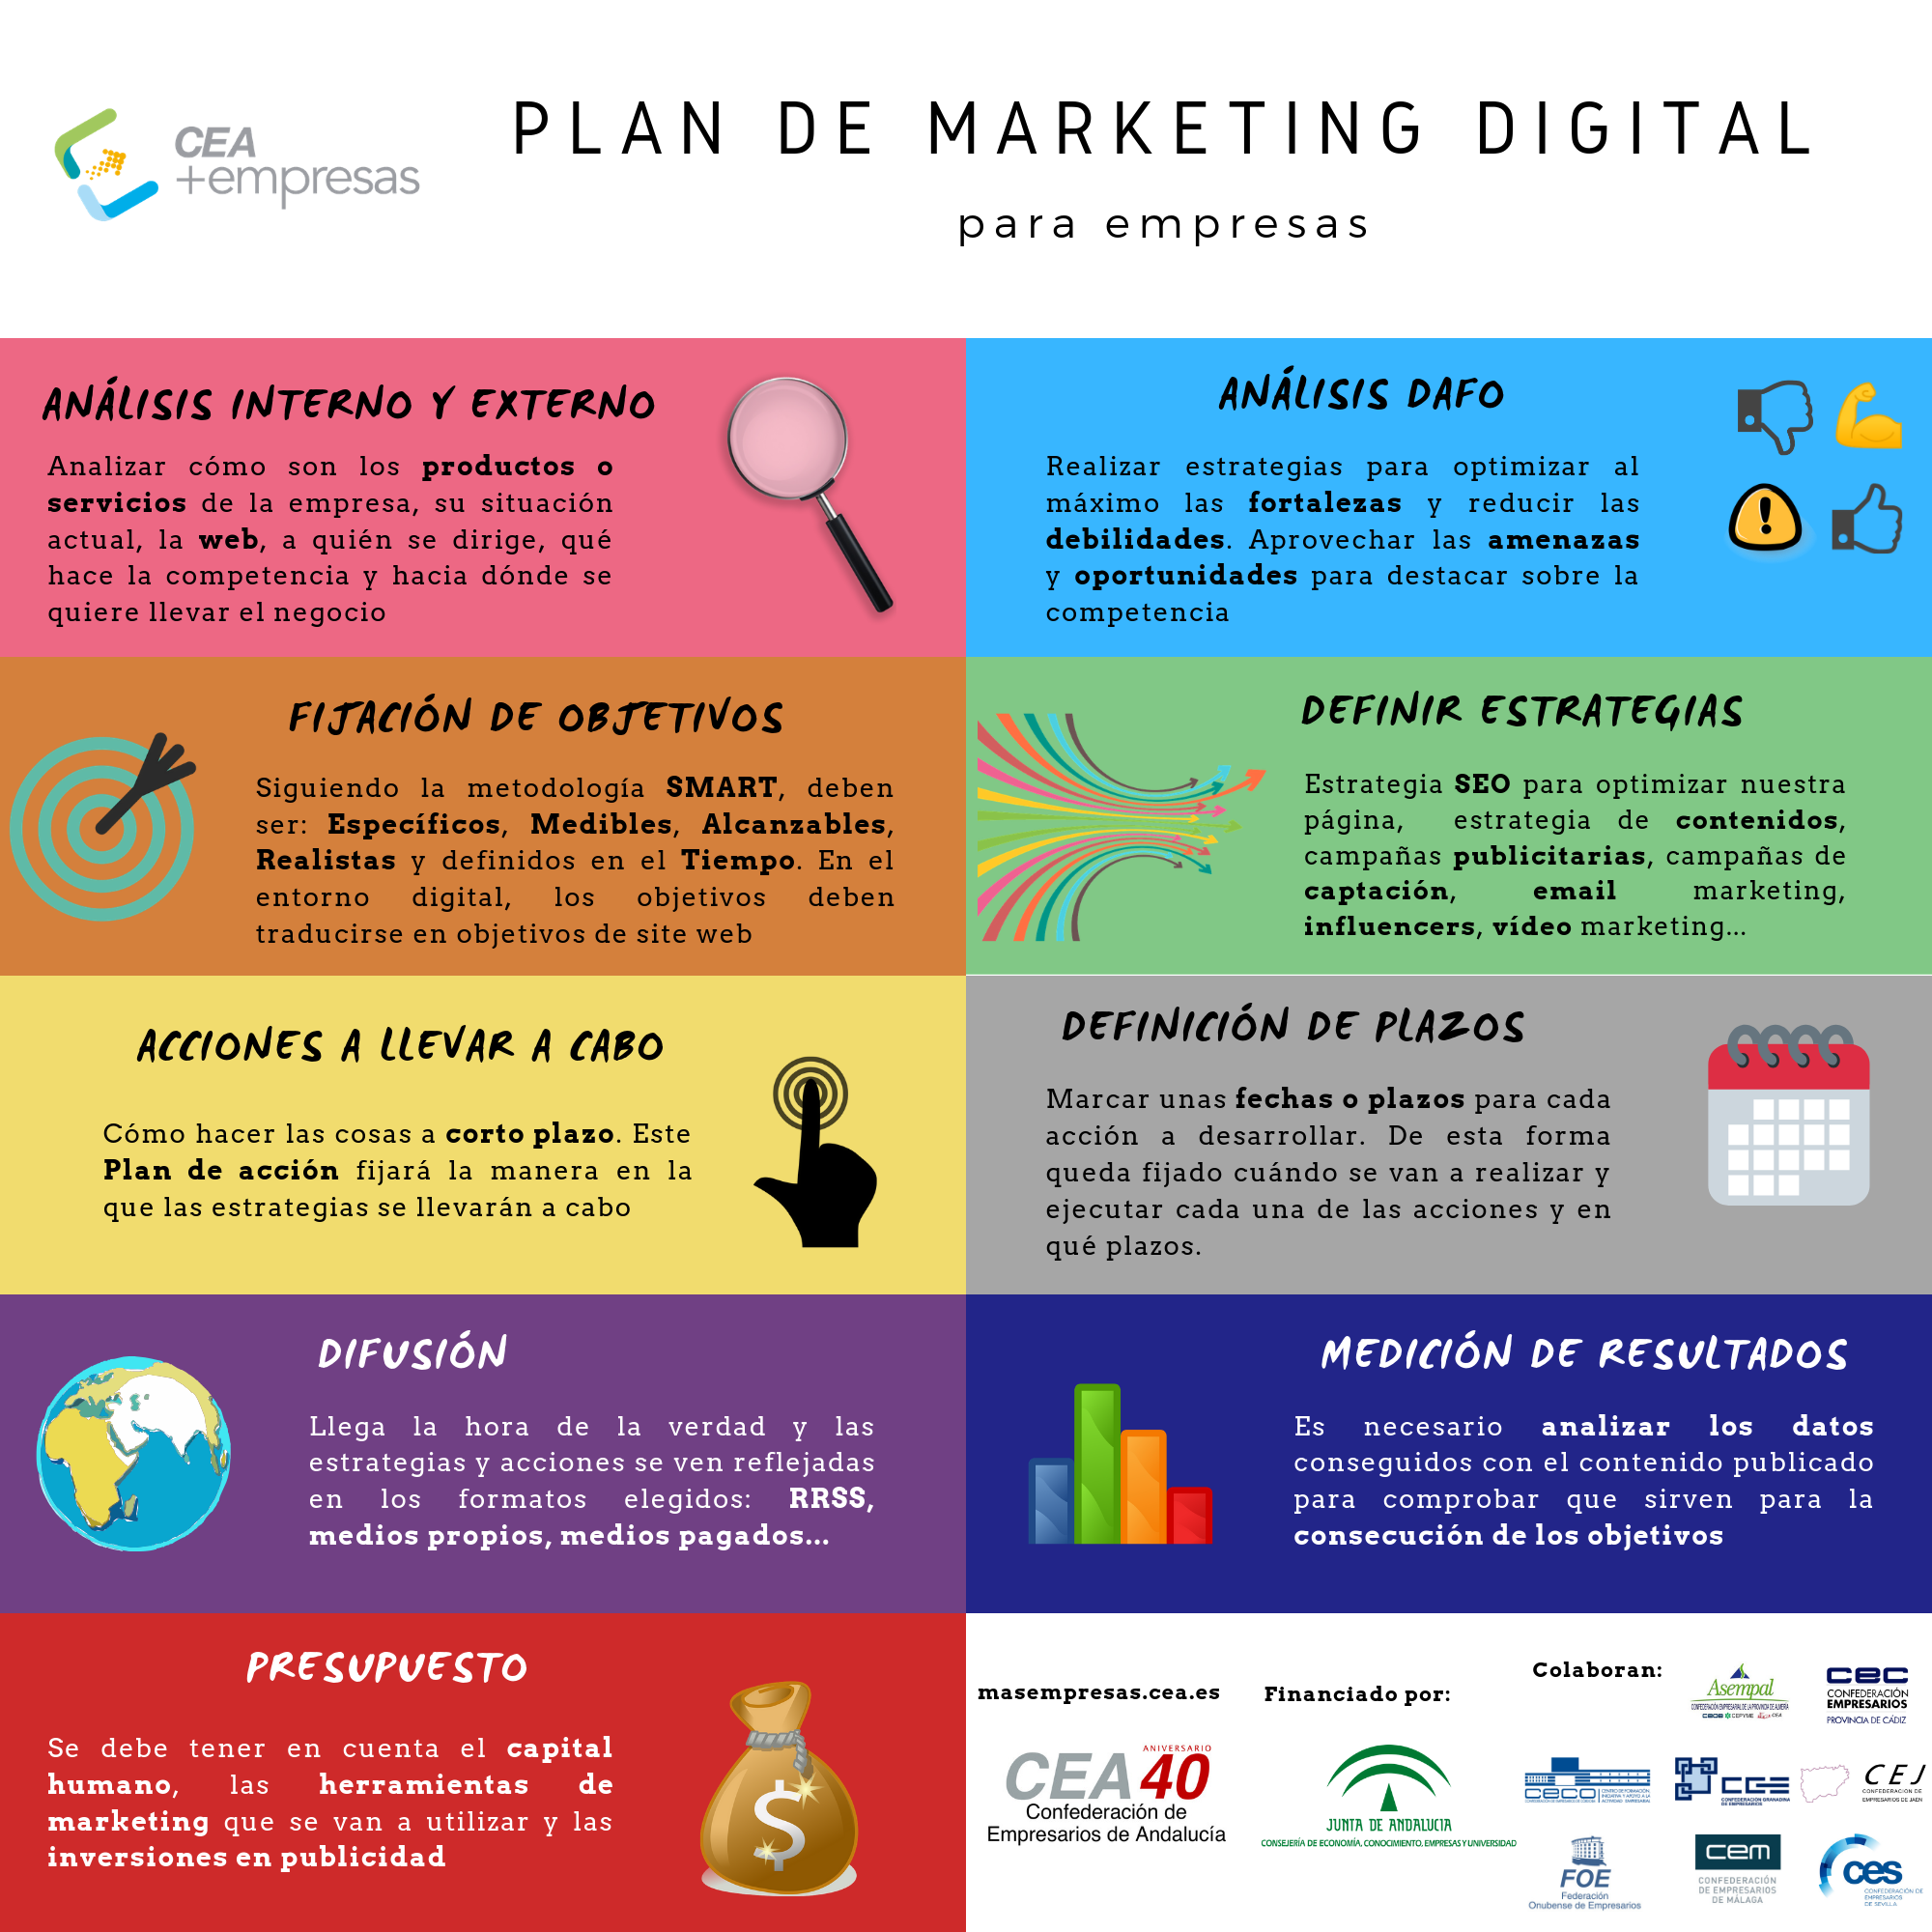 Infografía: Plan de Marketing Digital para empresas - CEA-Empresas